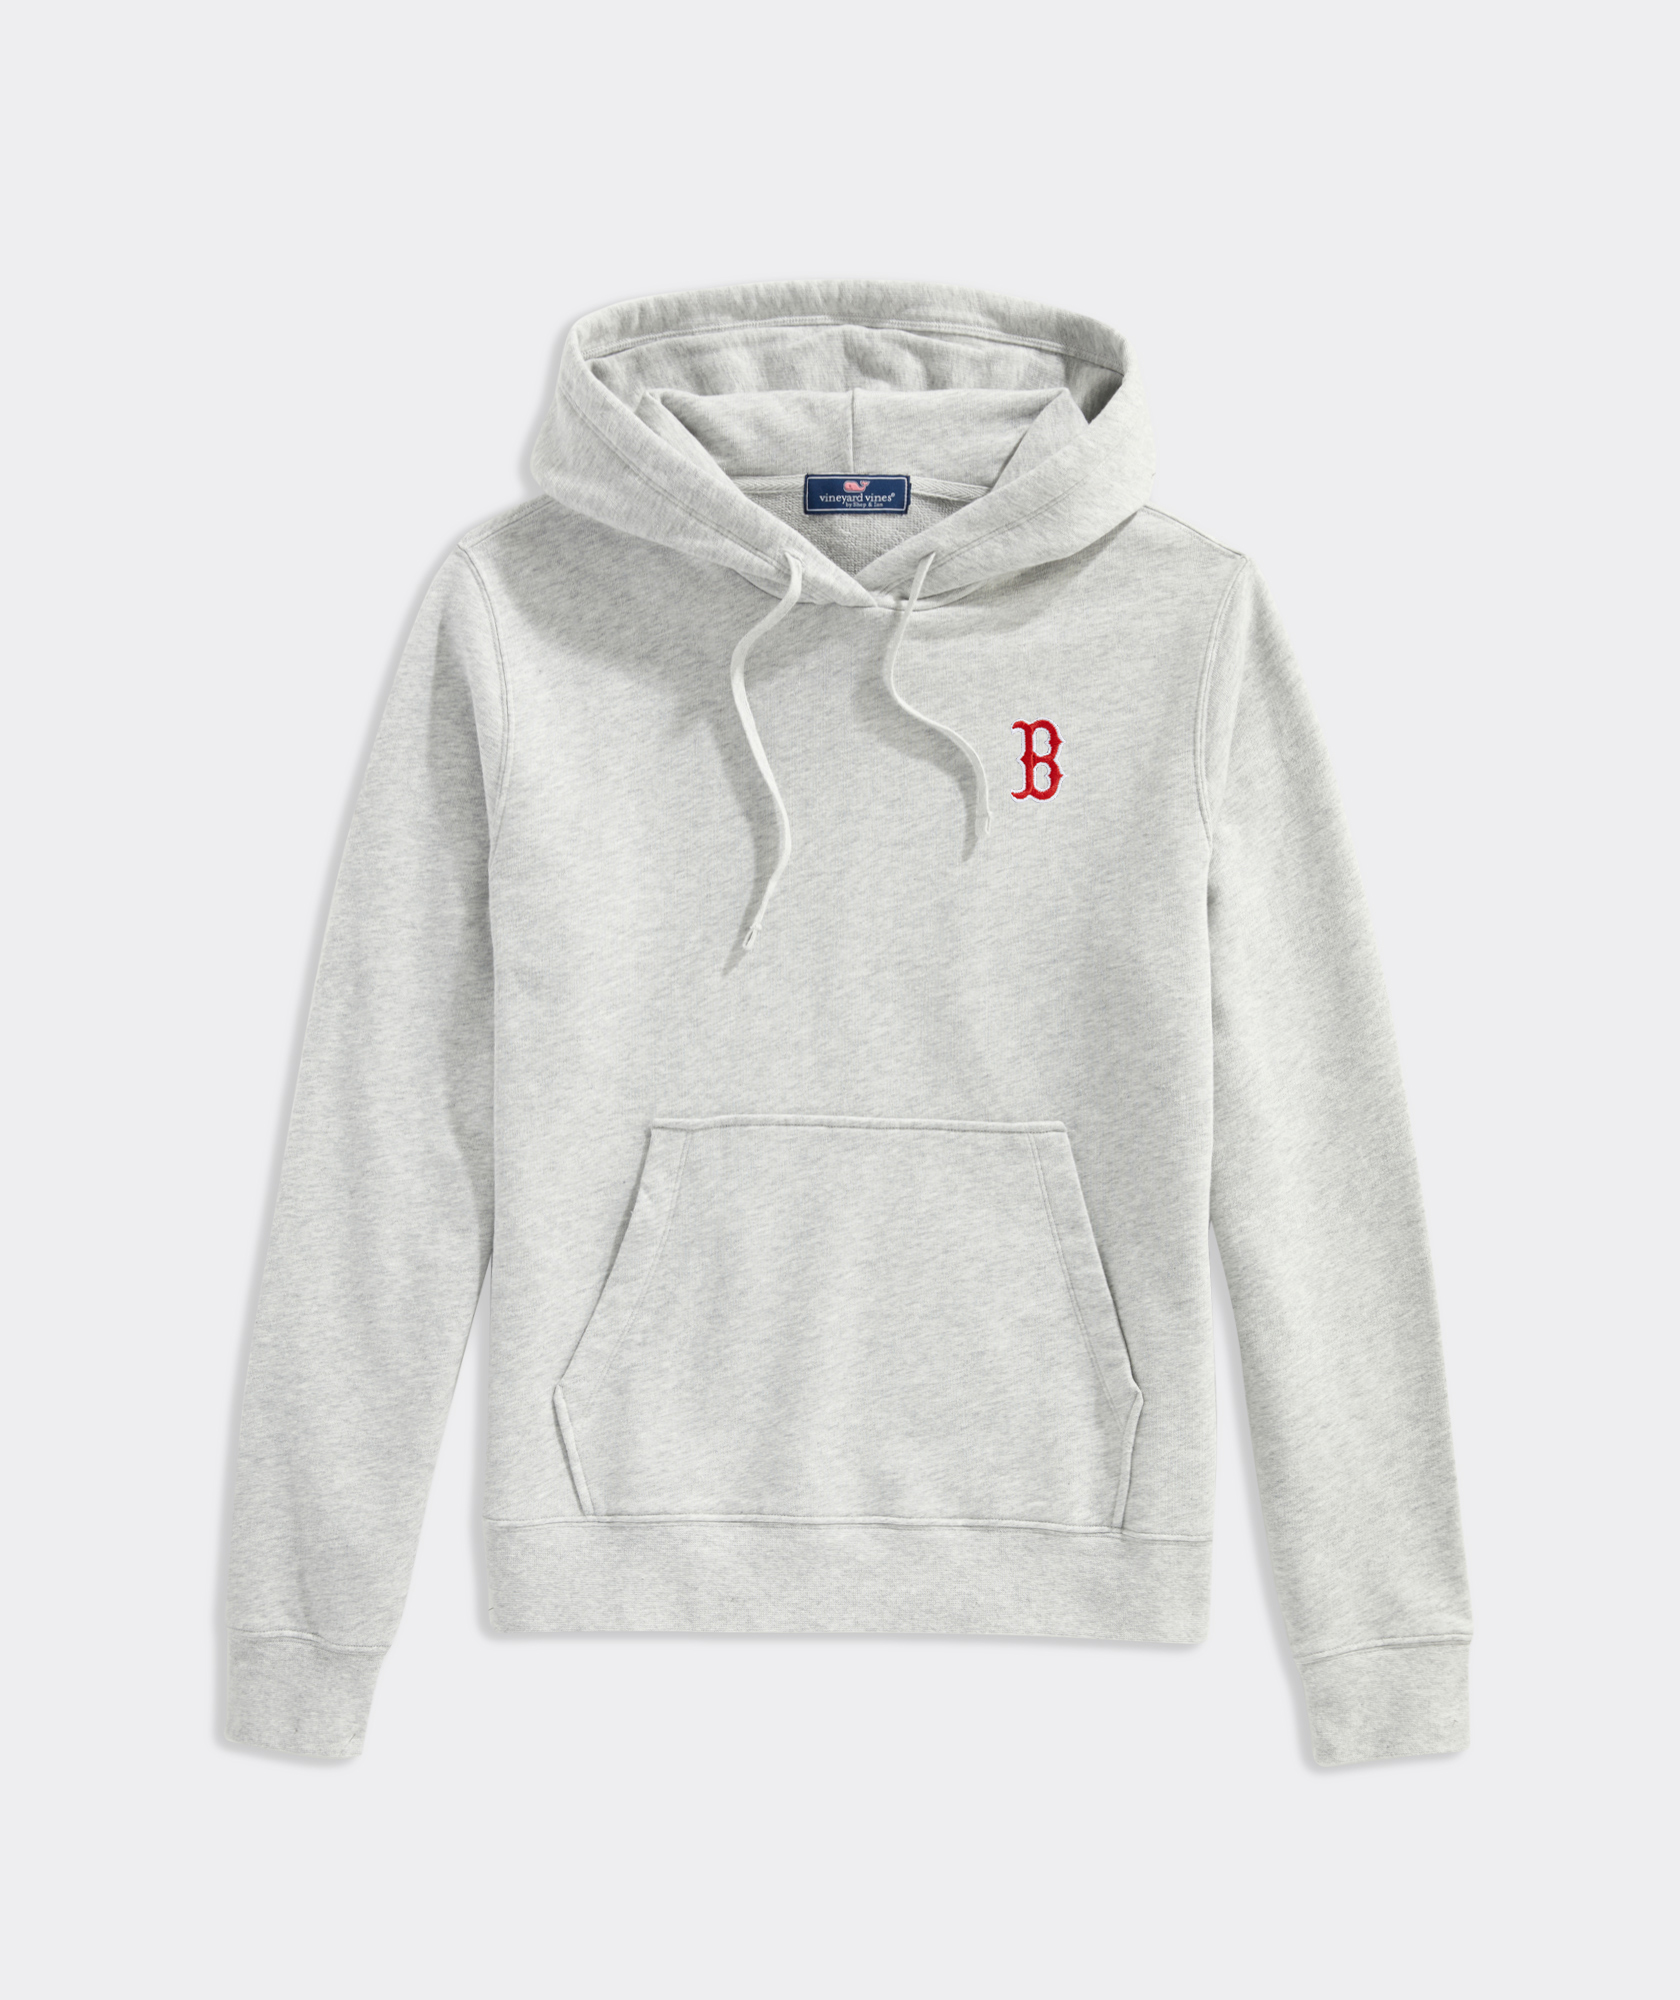 Boston Red Sox Hoodies, Red Sox Sweatshirts, Fleece